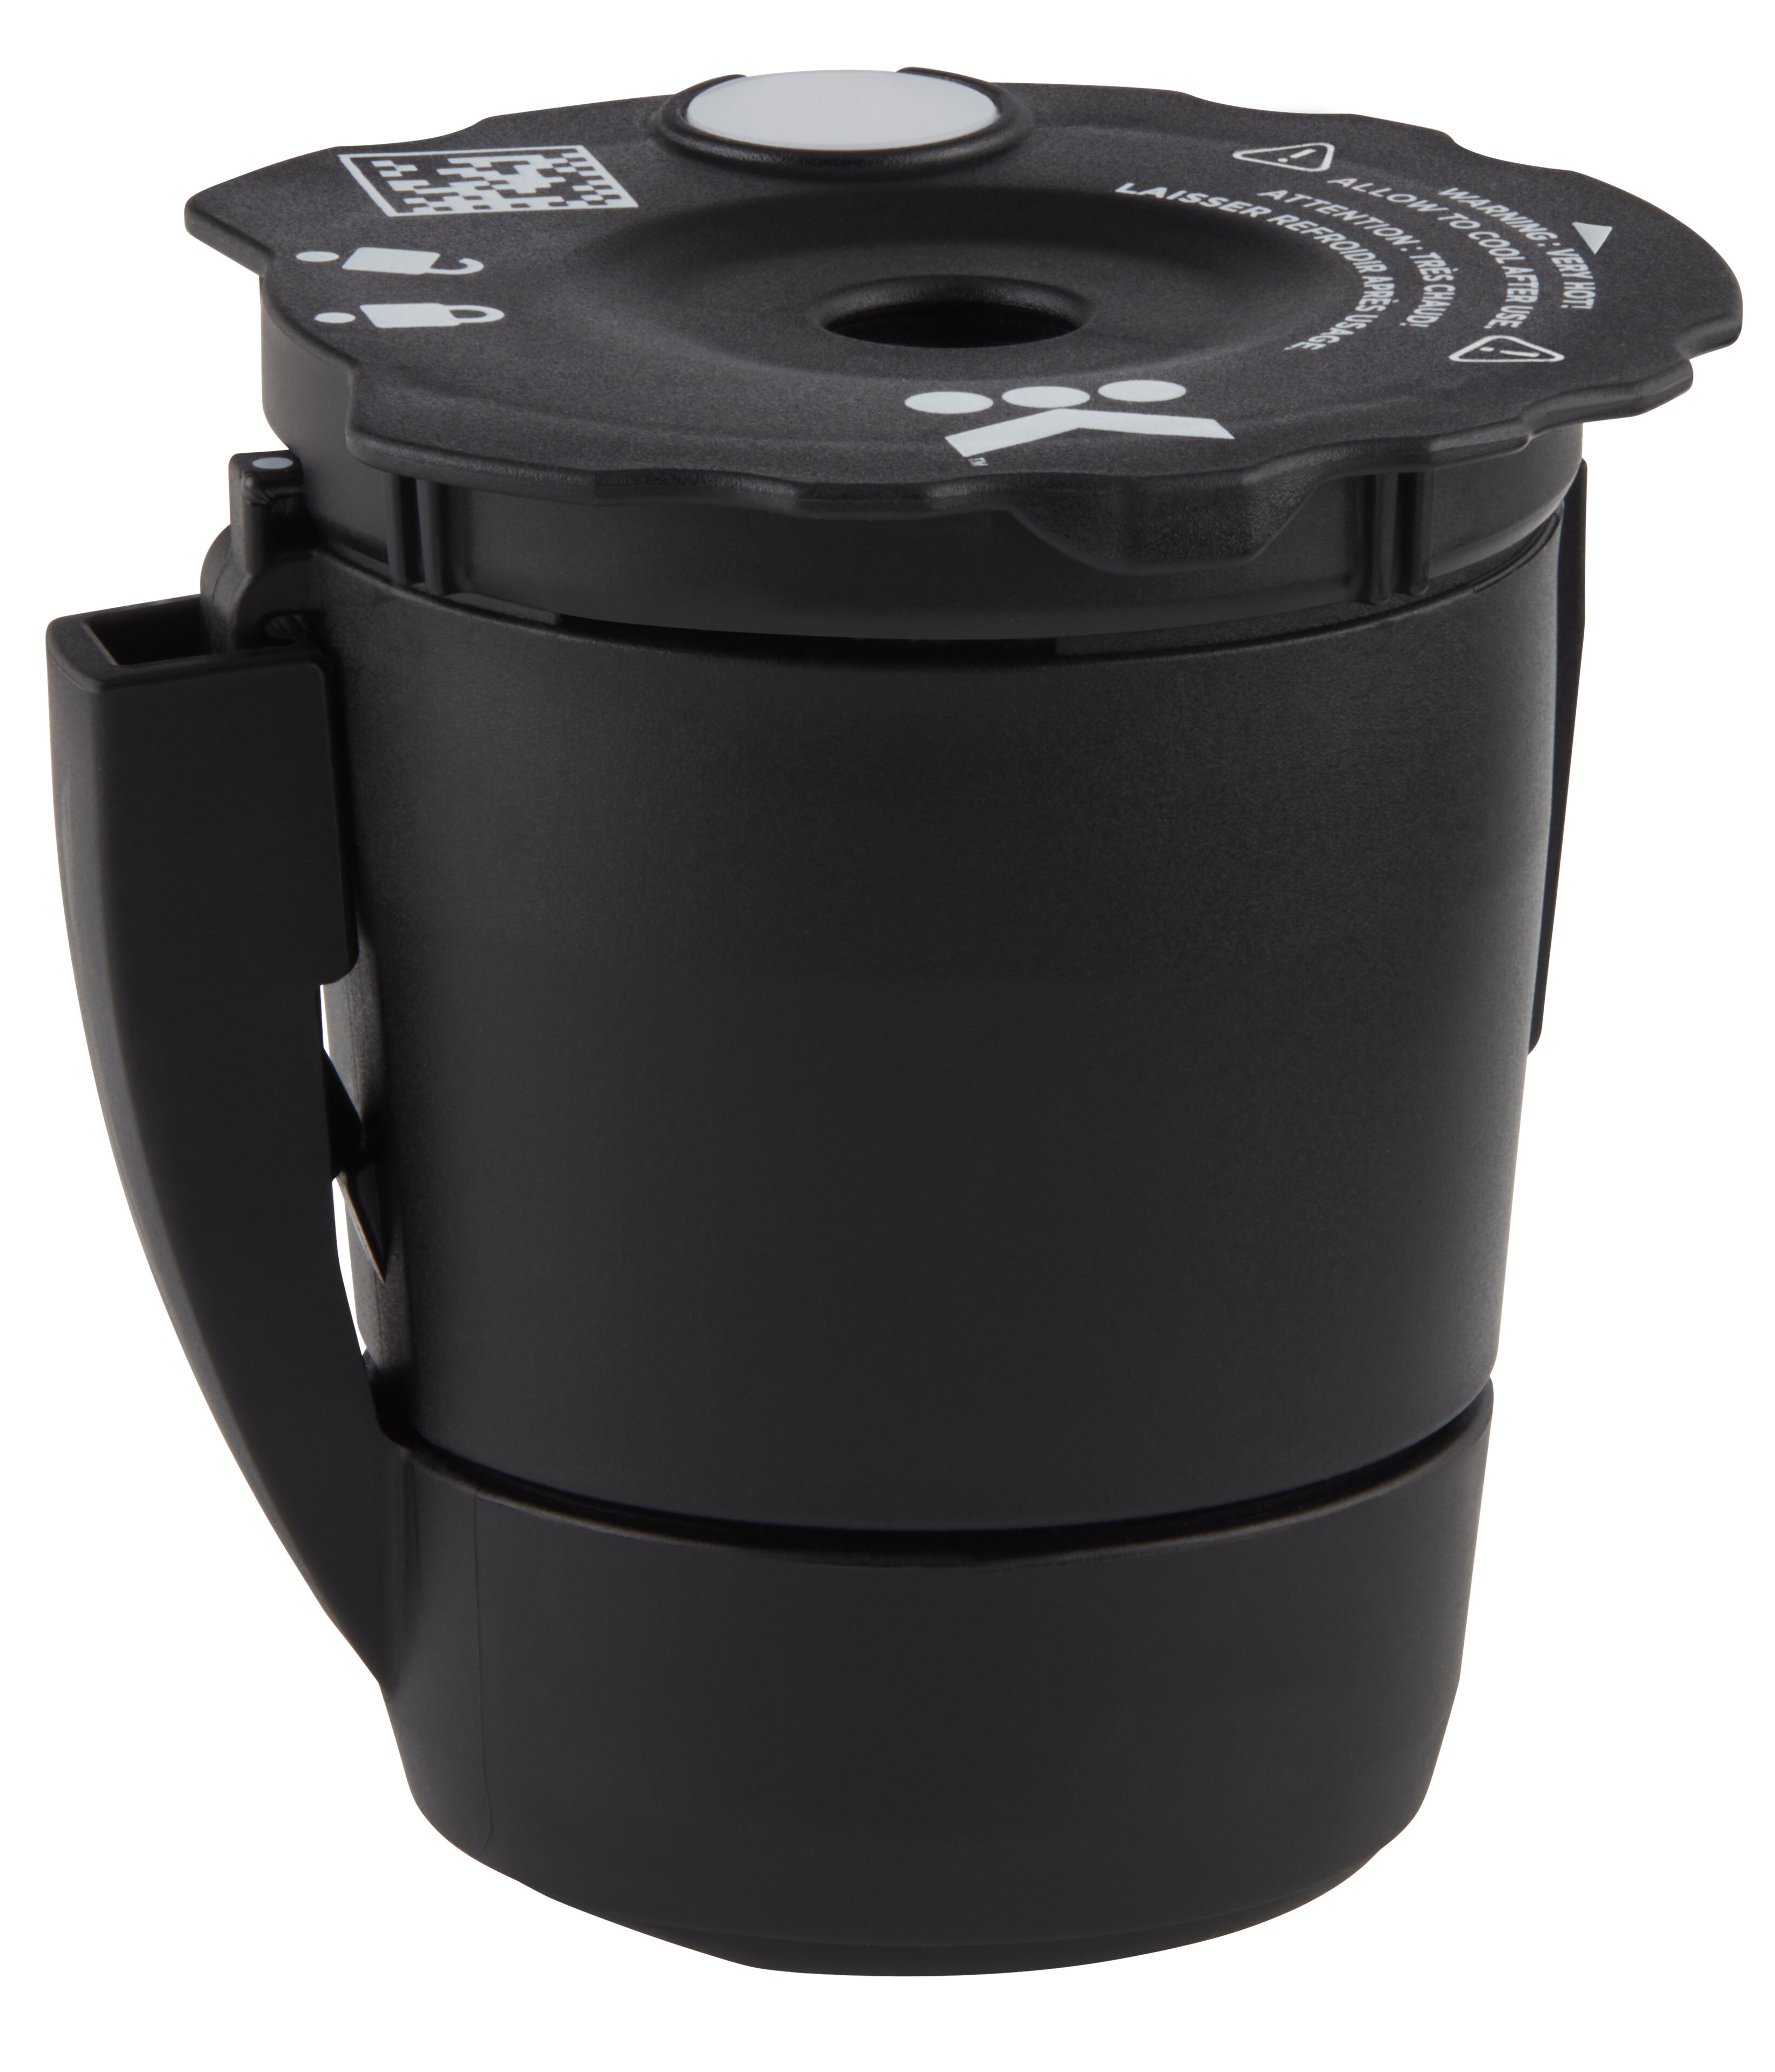  Keurig My K-Cup Reusable K-Cup Pod Coffee Filter